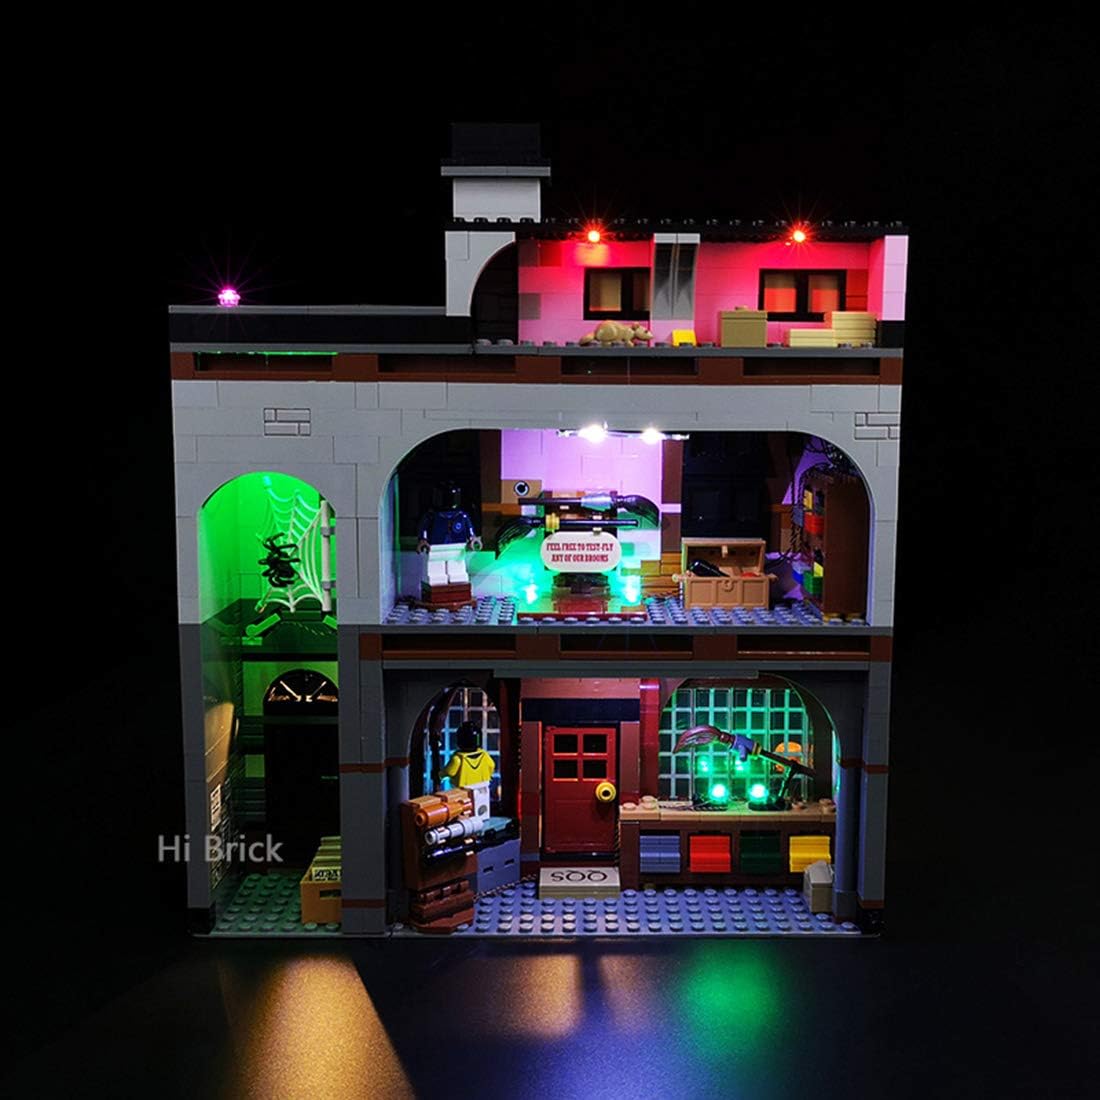 LED Light Kit for Harry Potter Diagon Alley 75978 Building Kit (2020), Lighting Kit Compatible with Lego 75978 Building Blocks Model, No Lego Set- Remote Control Version